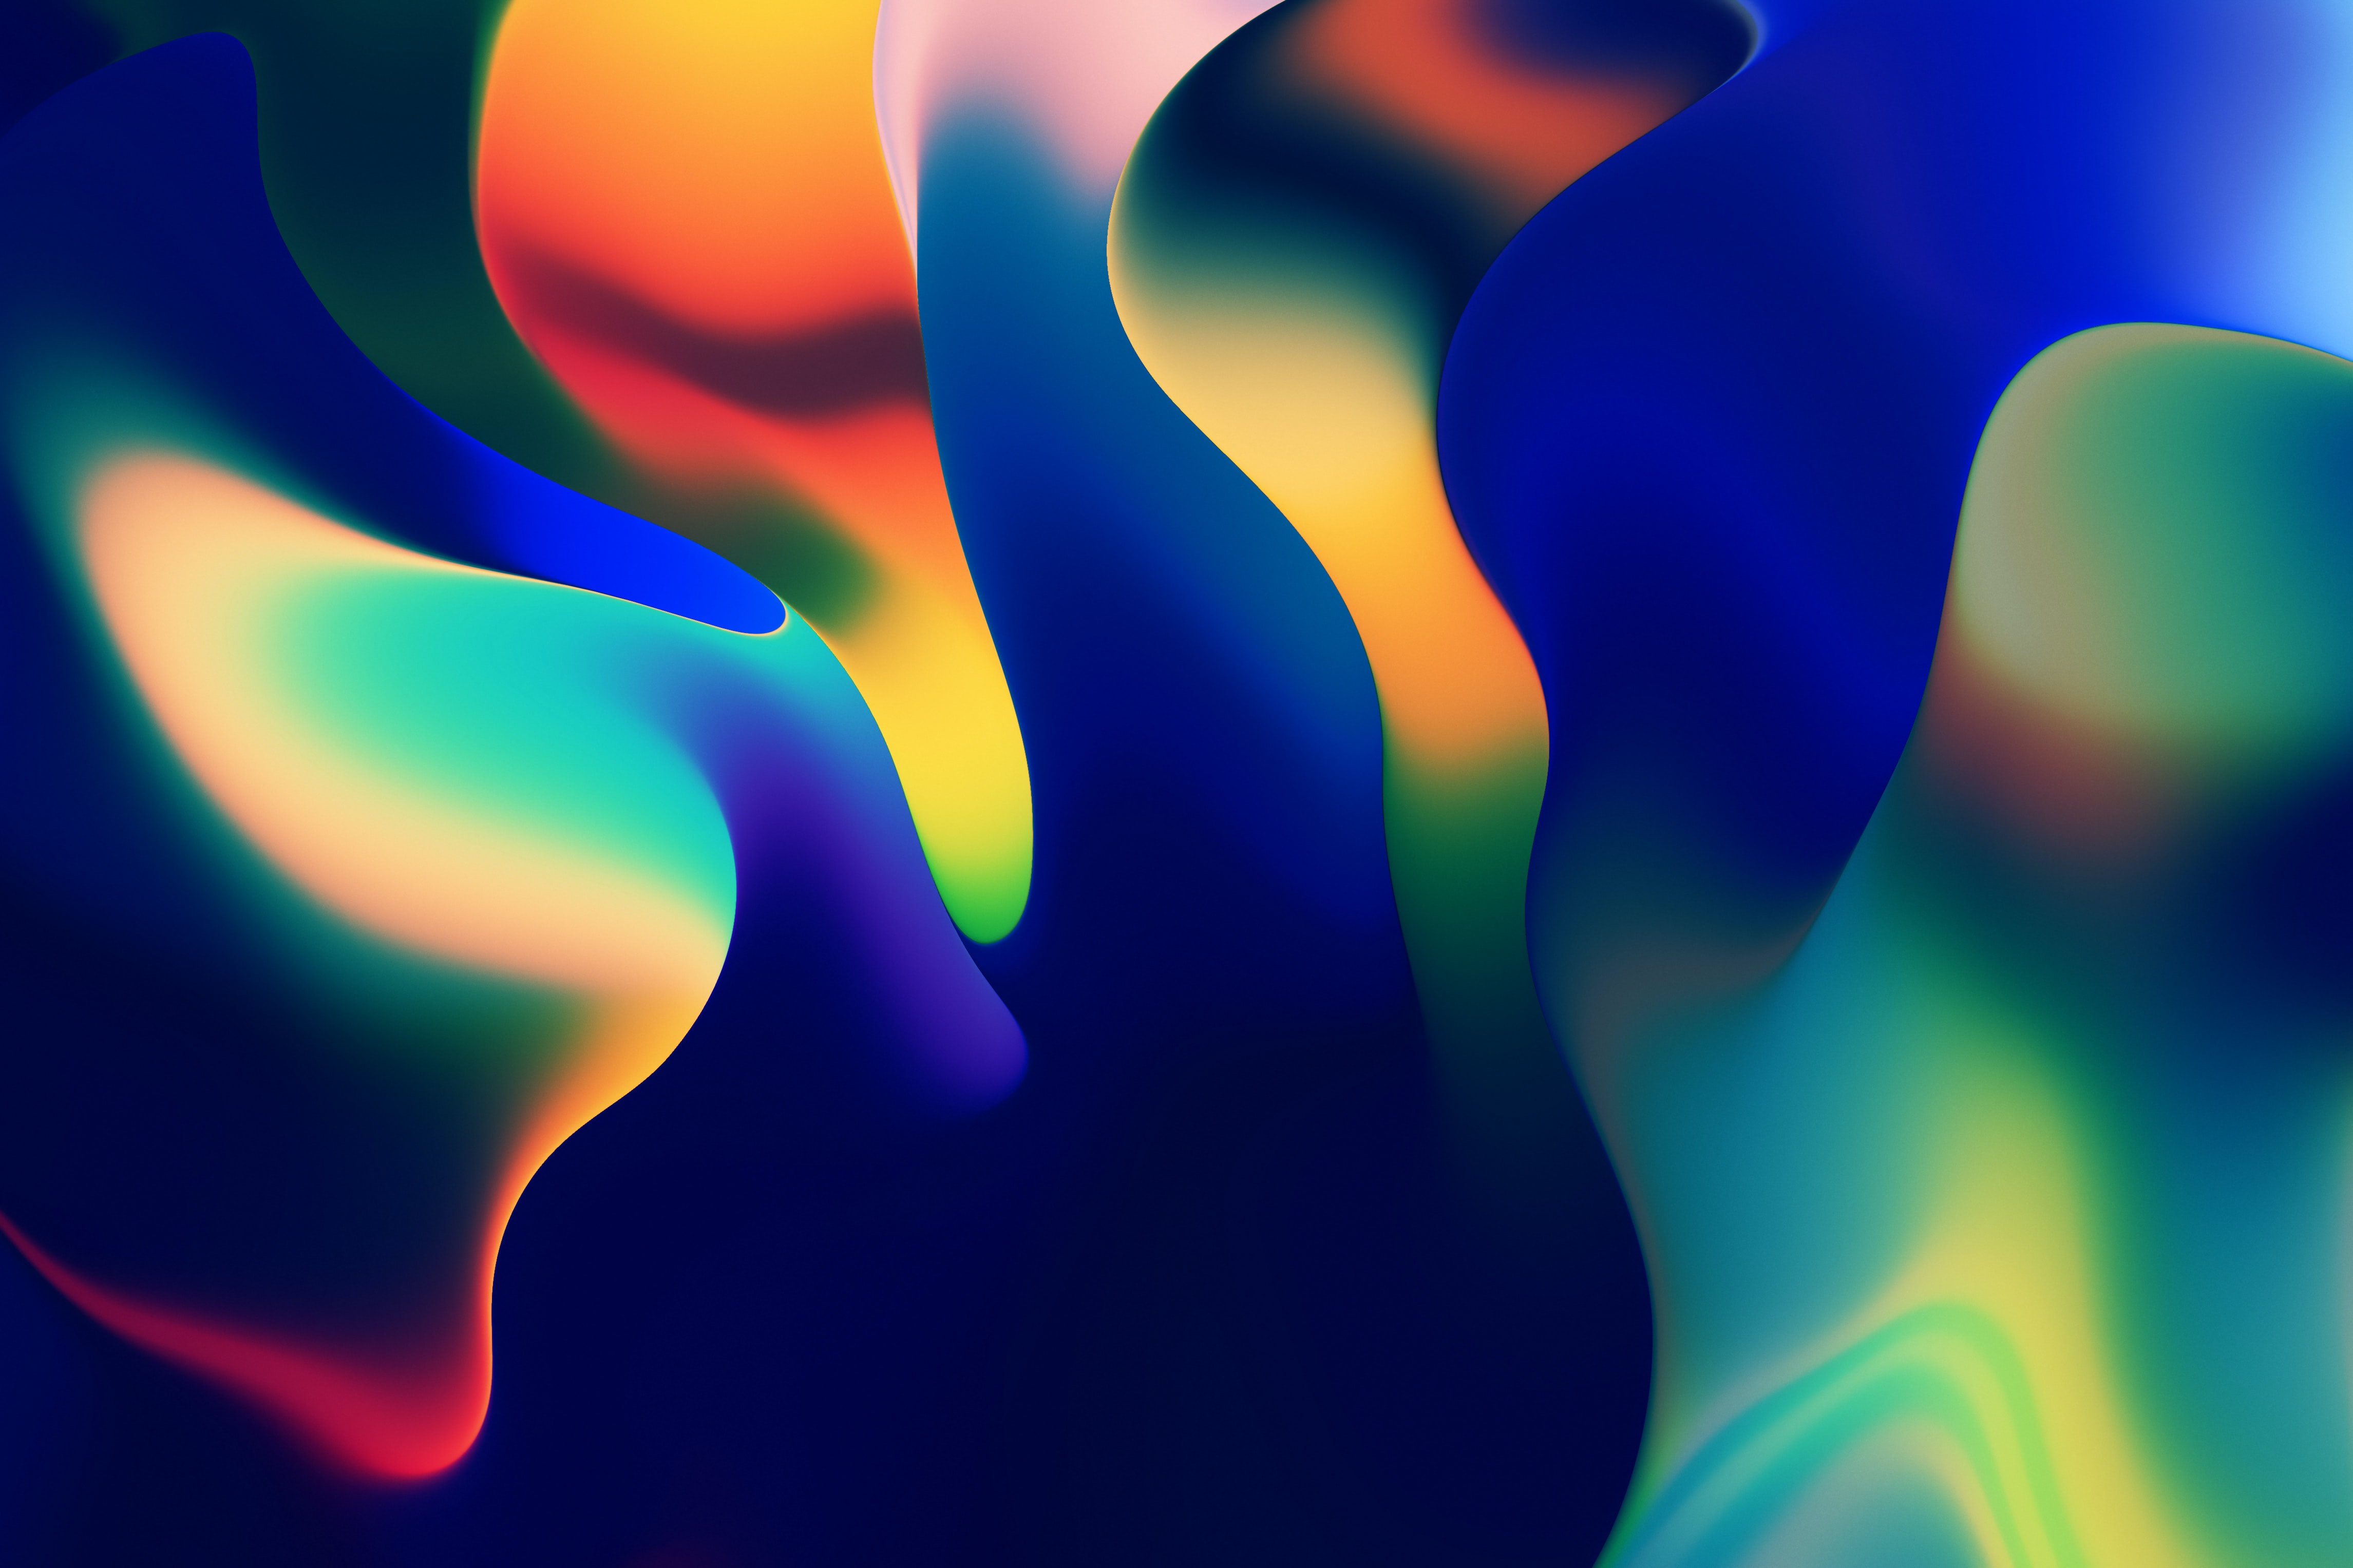 Multicolored swirls on a dark blue background